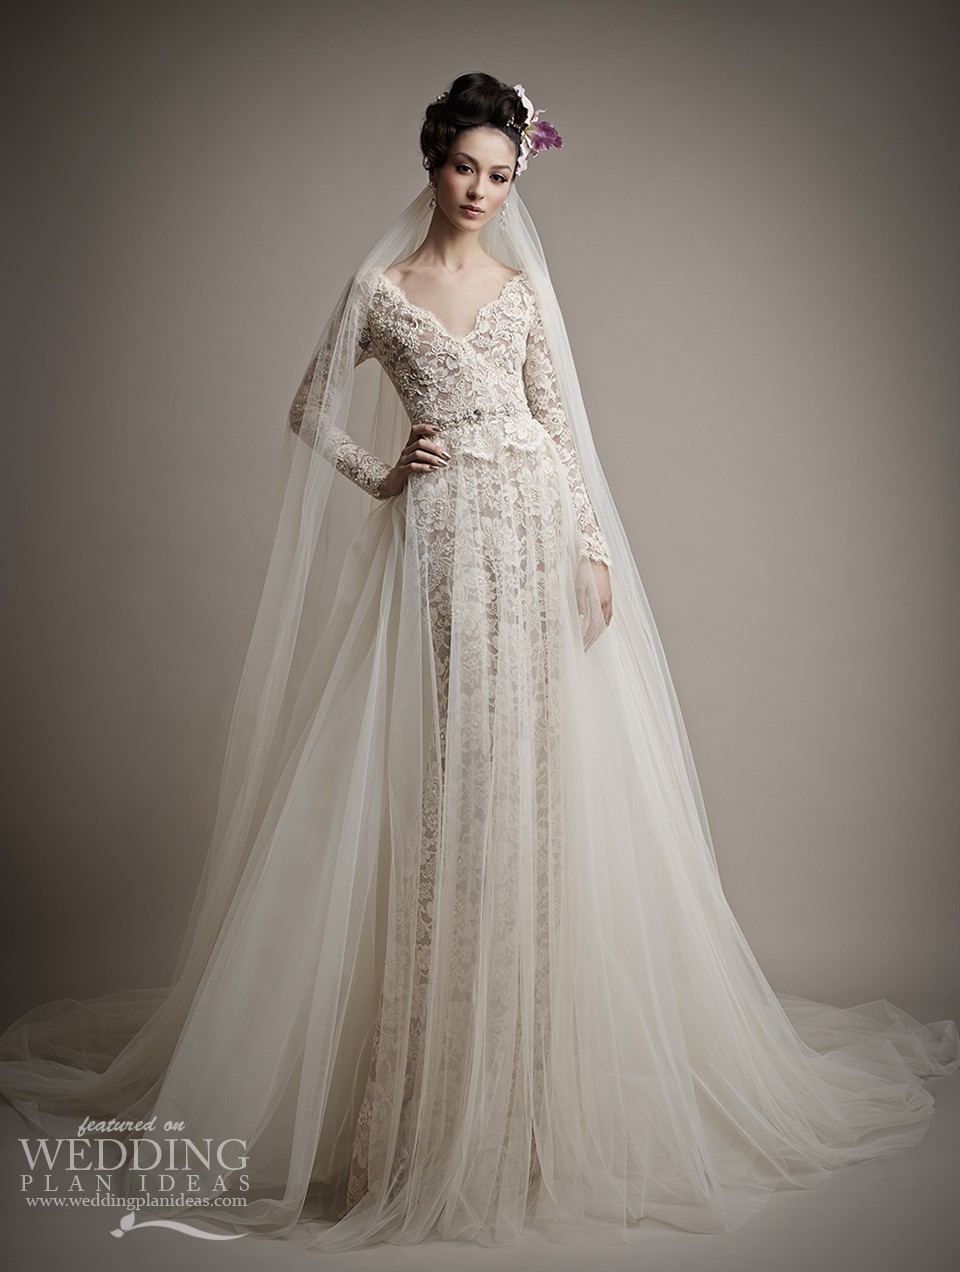 Yatie Full Embroidery Wedding Dress by Ersa Atelier